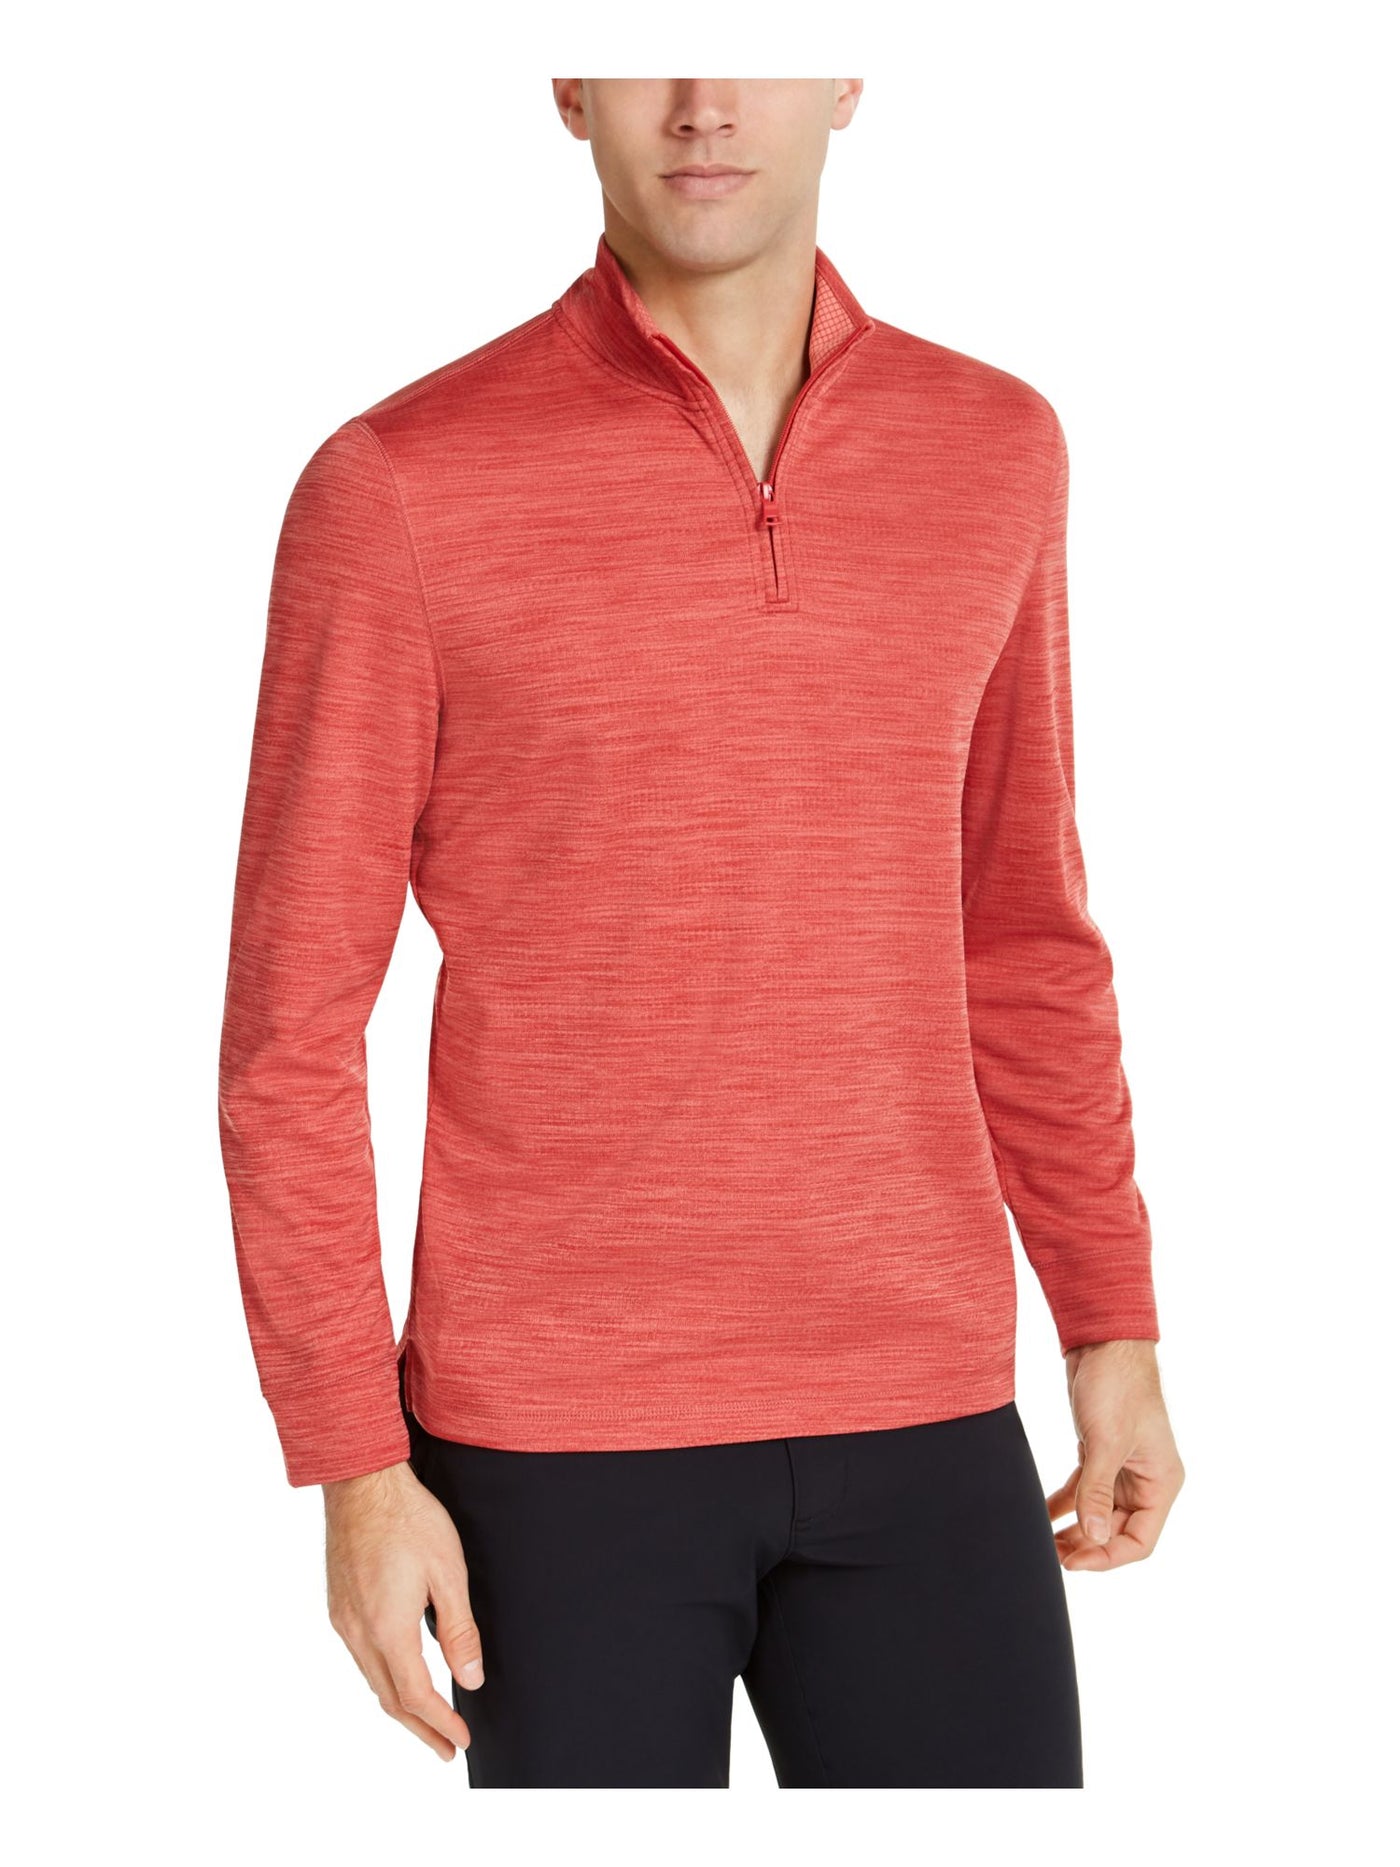 CLUBROOM Mens Red Printed Collared Quarter-Zip Sweatshirt S